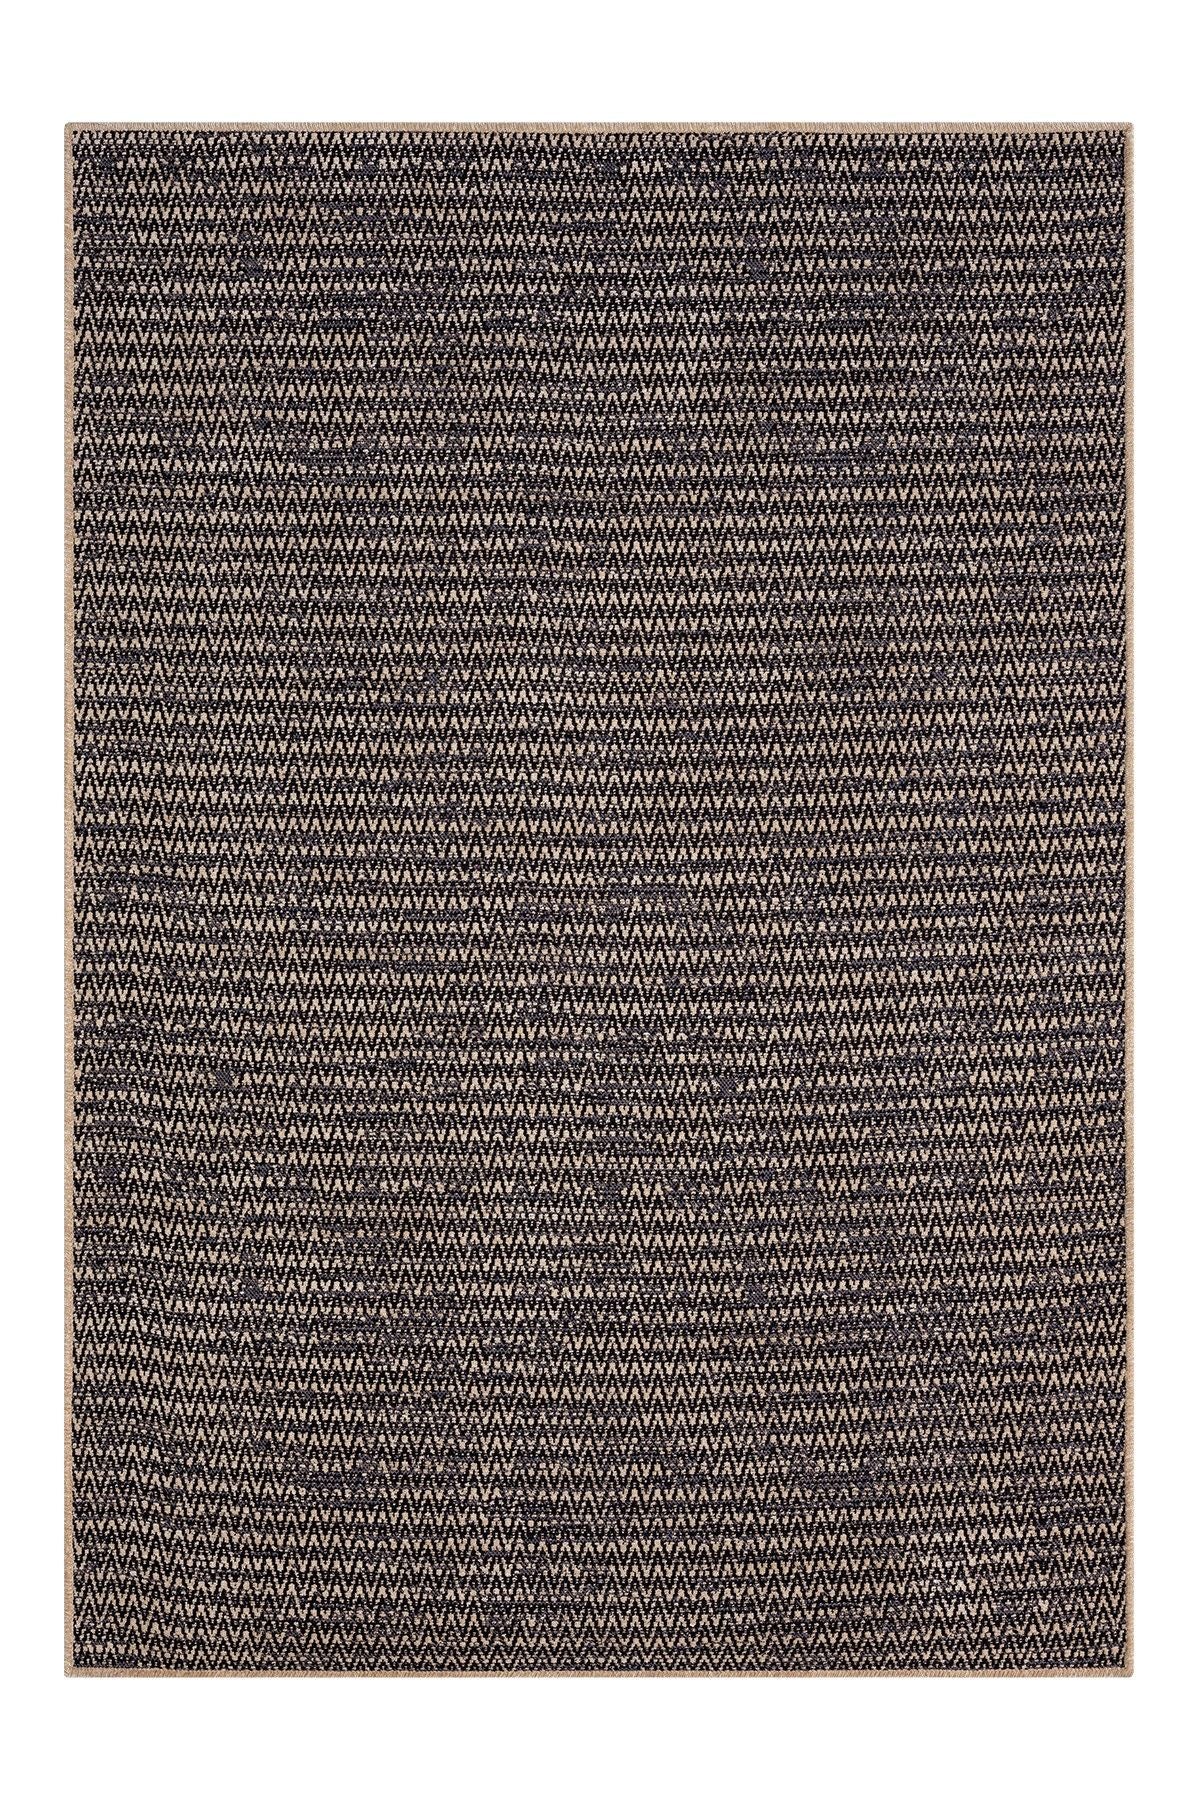 Terapia 3604 - Carpet (80 x 150)